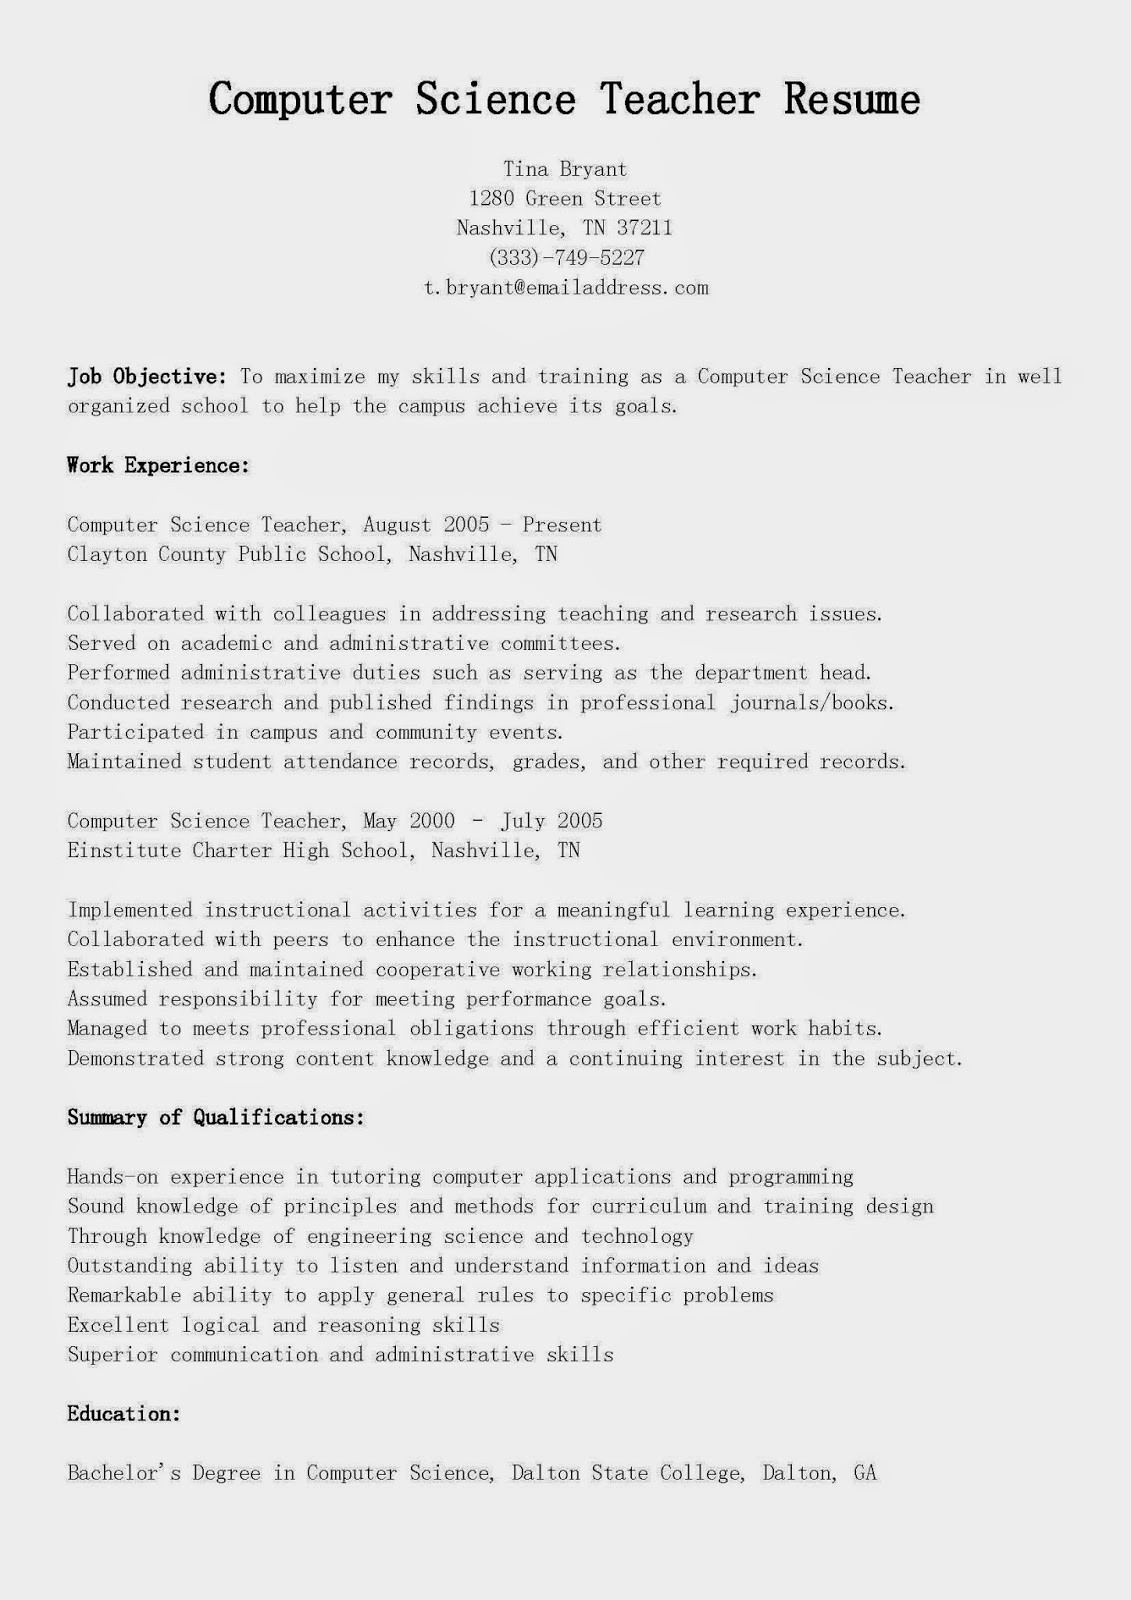 Sample Resume for Lecturer In Computer Science with Experience Resume Samples Puter Science Teacher Resume Sample